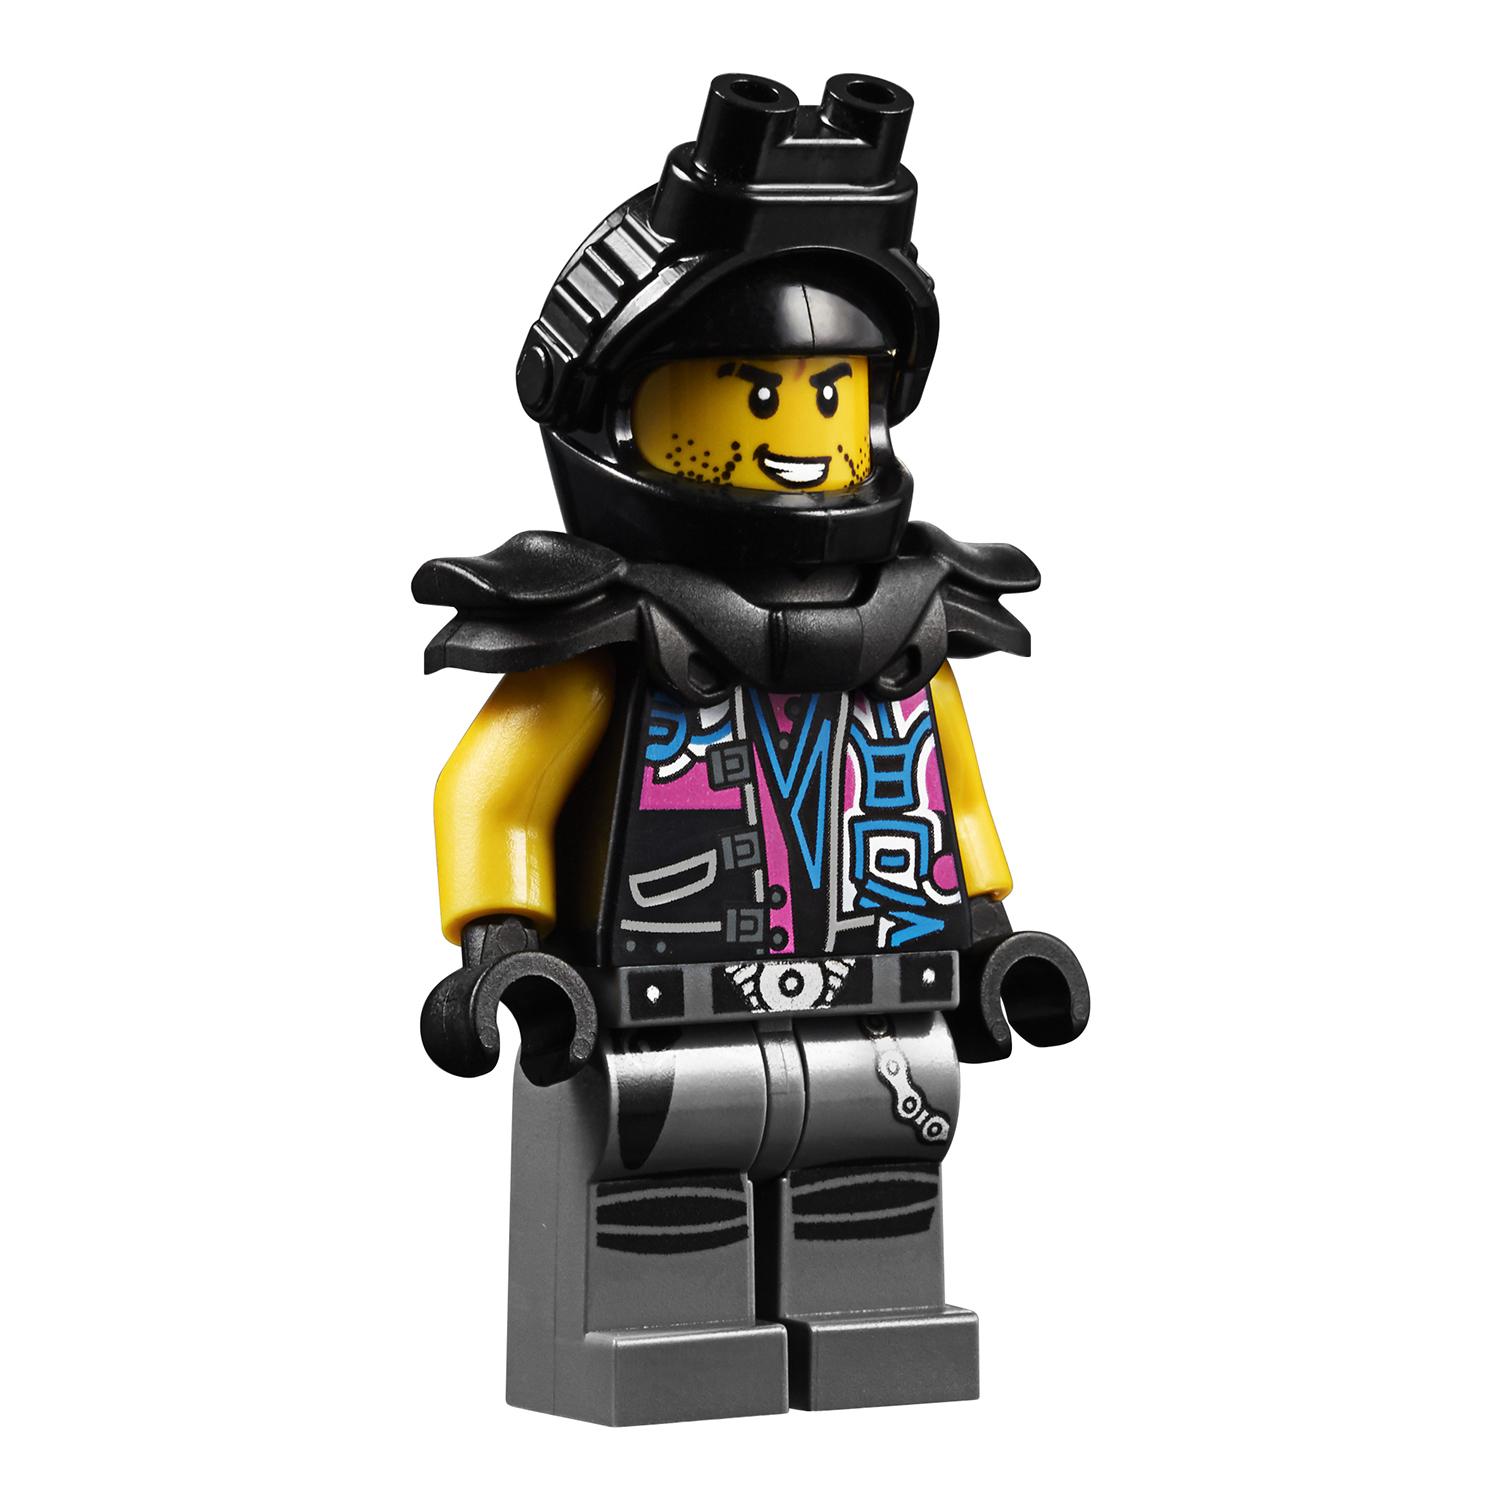 Конструктор из серии Lego Ninjago - Катана V11  